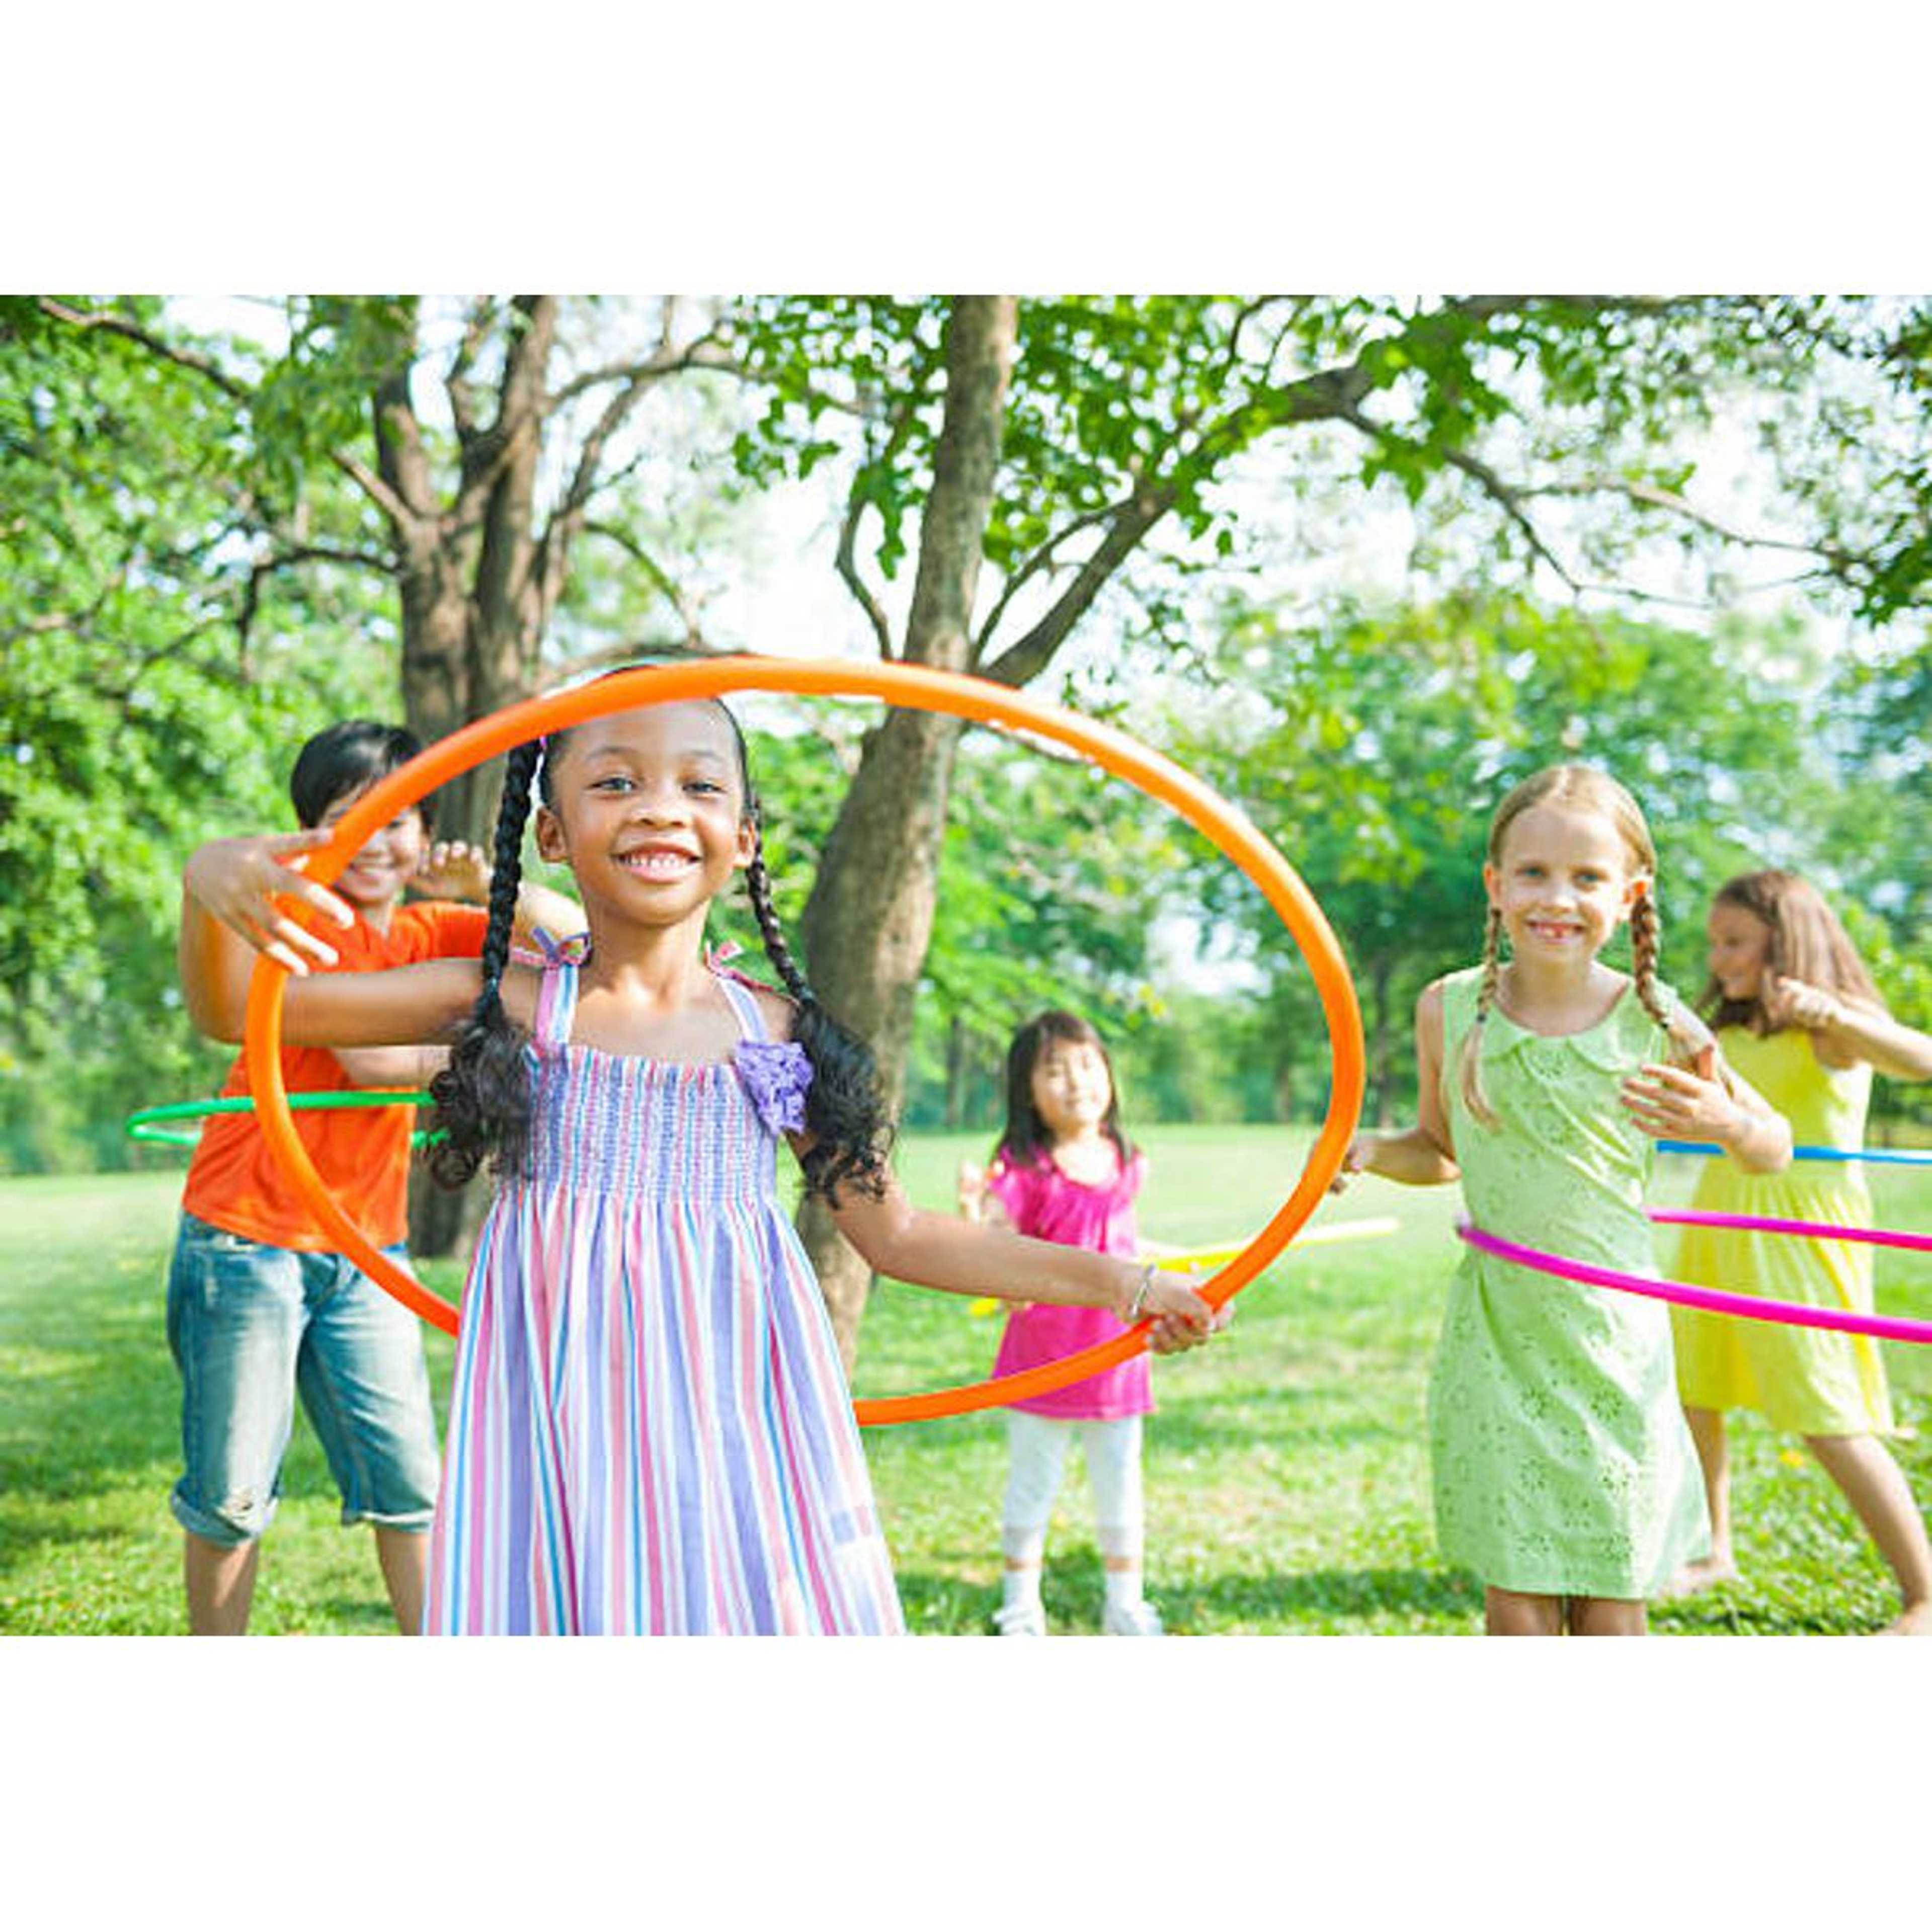 ORIGINAL Hula Hoops For Kids - Hula Hoop For Fitness And Games - Hula Hoop